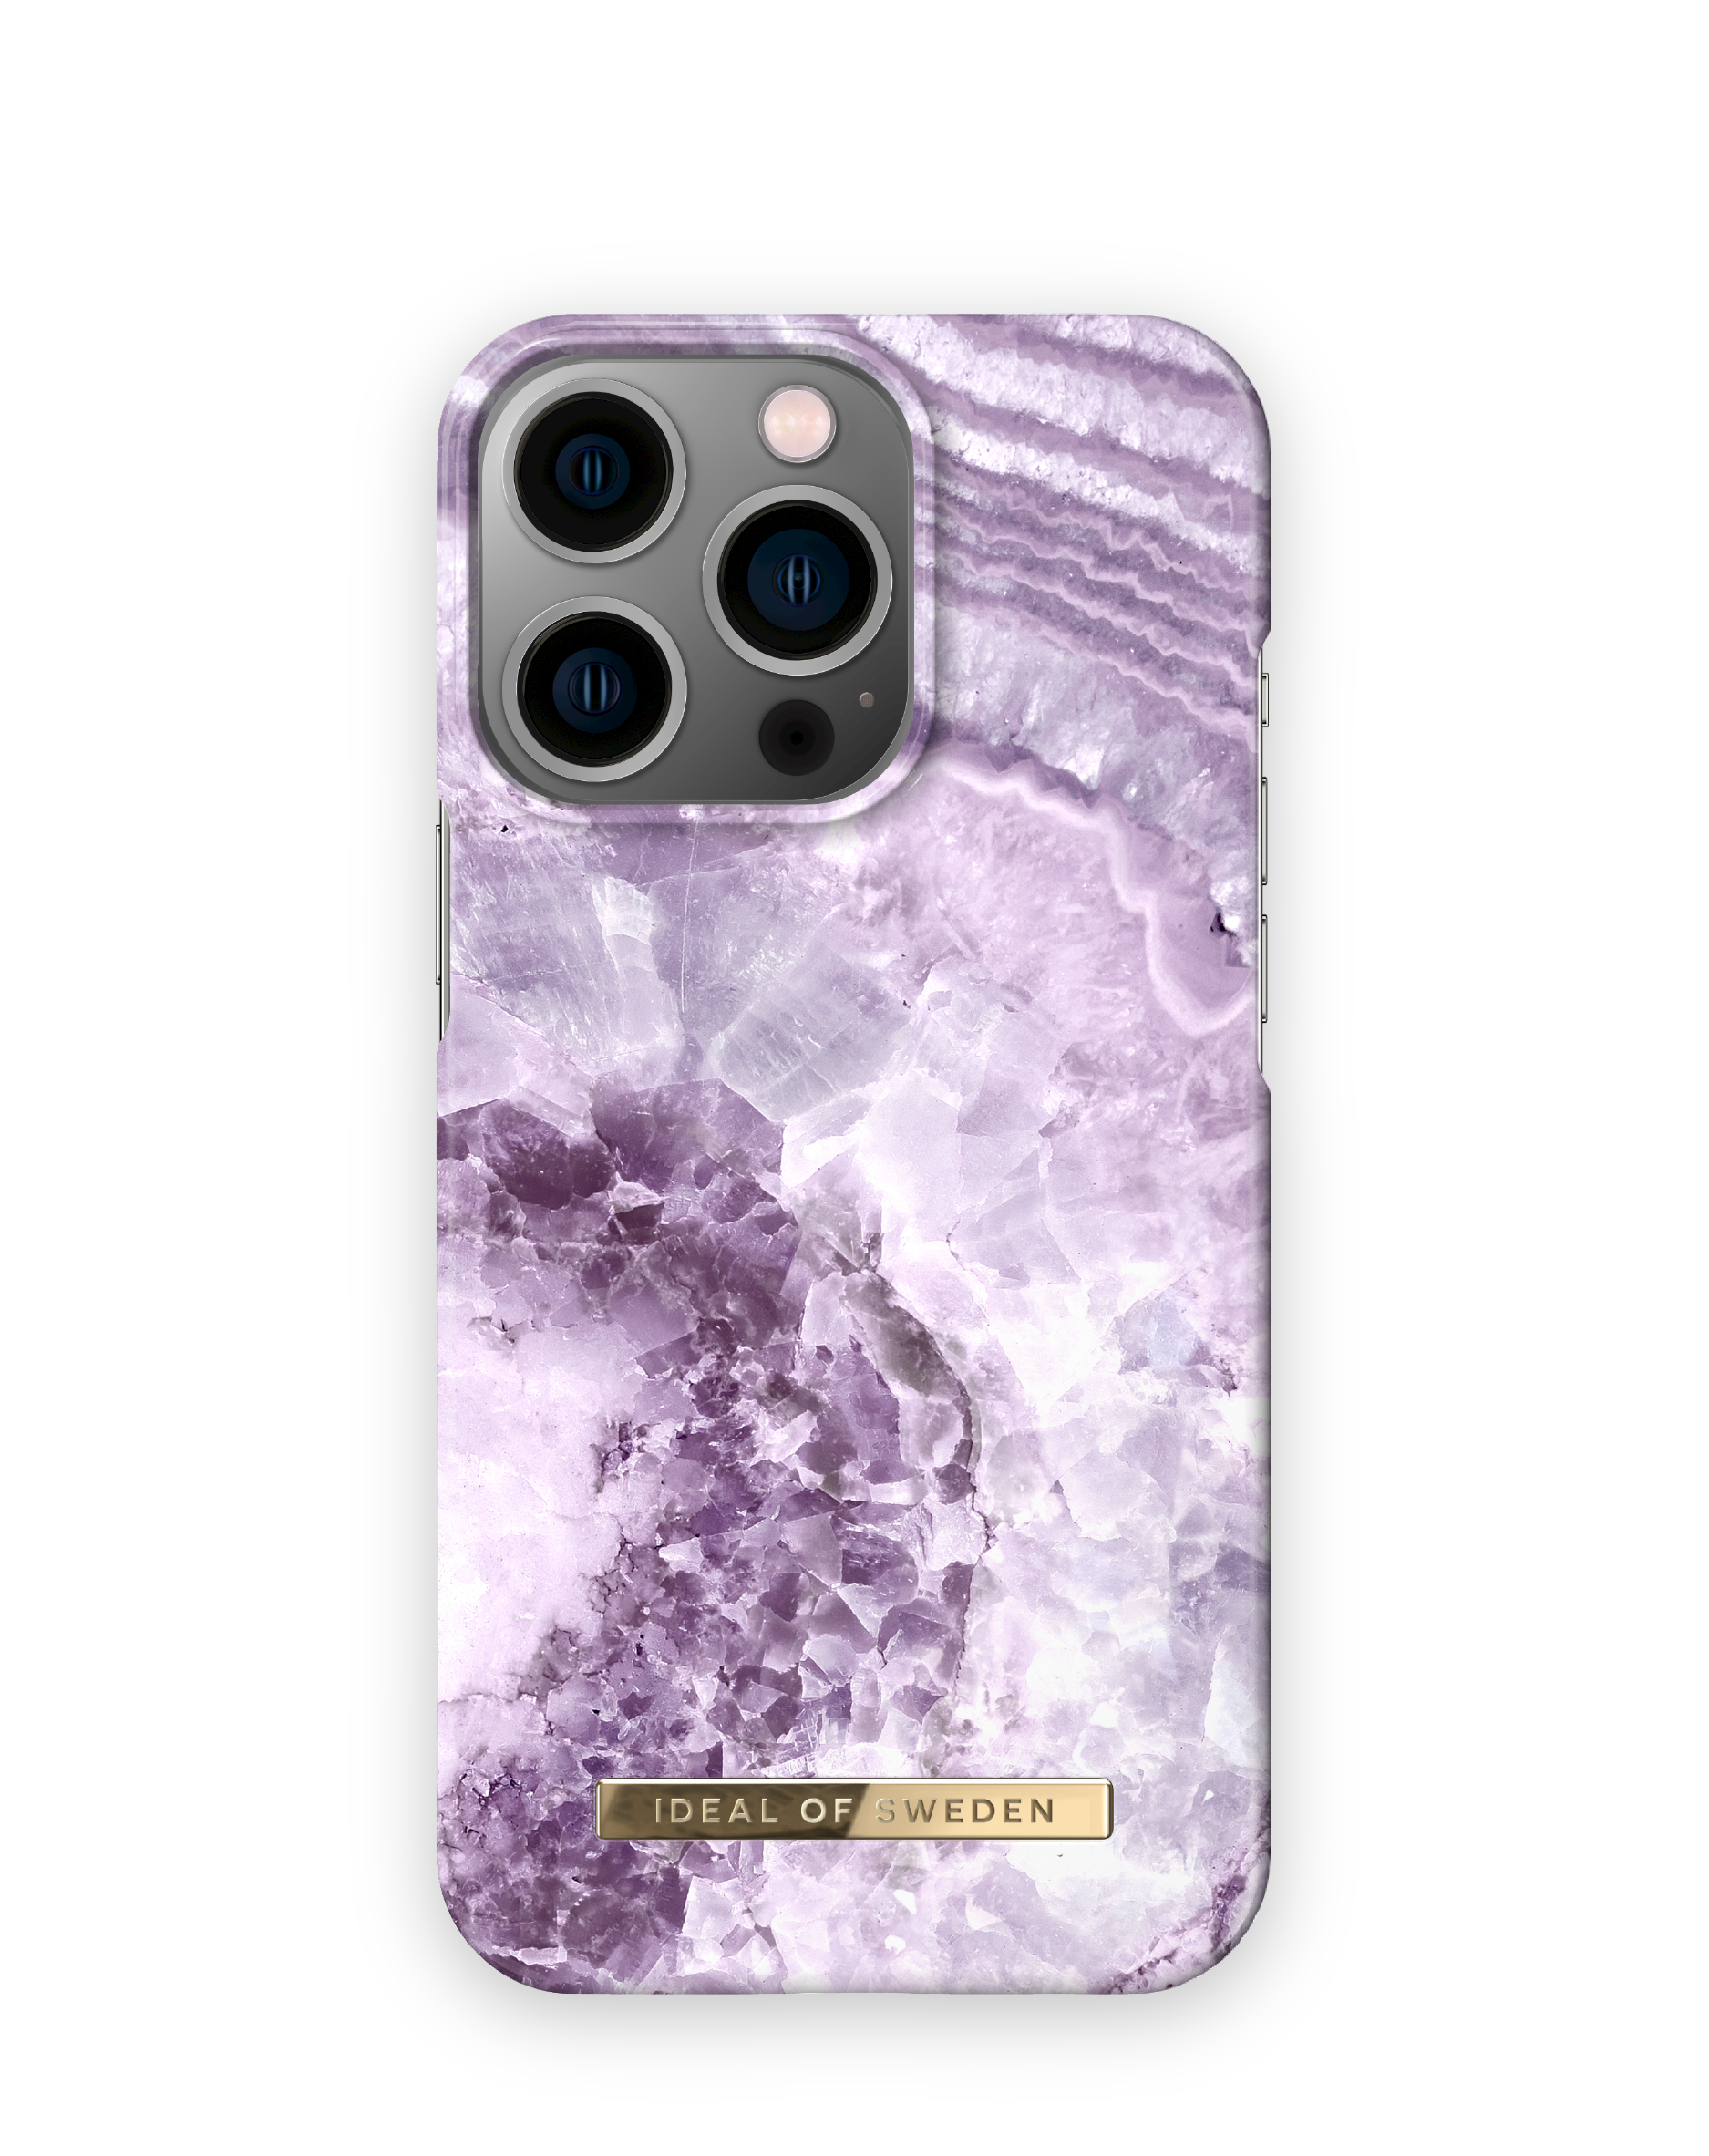 iDeal Fashion Case iPhone 14 Pro Amethyst